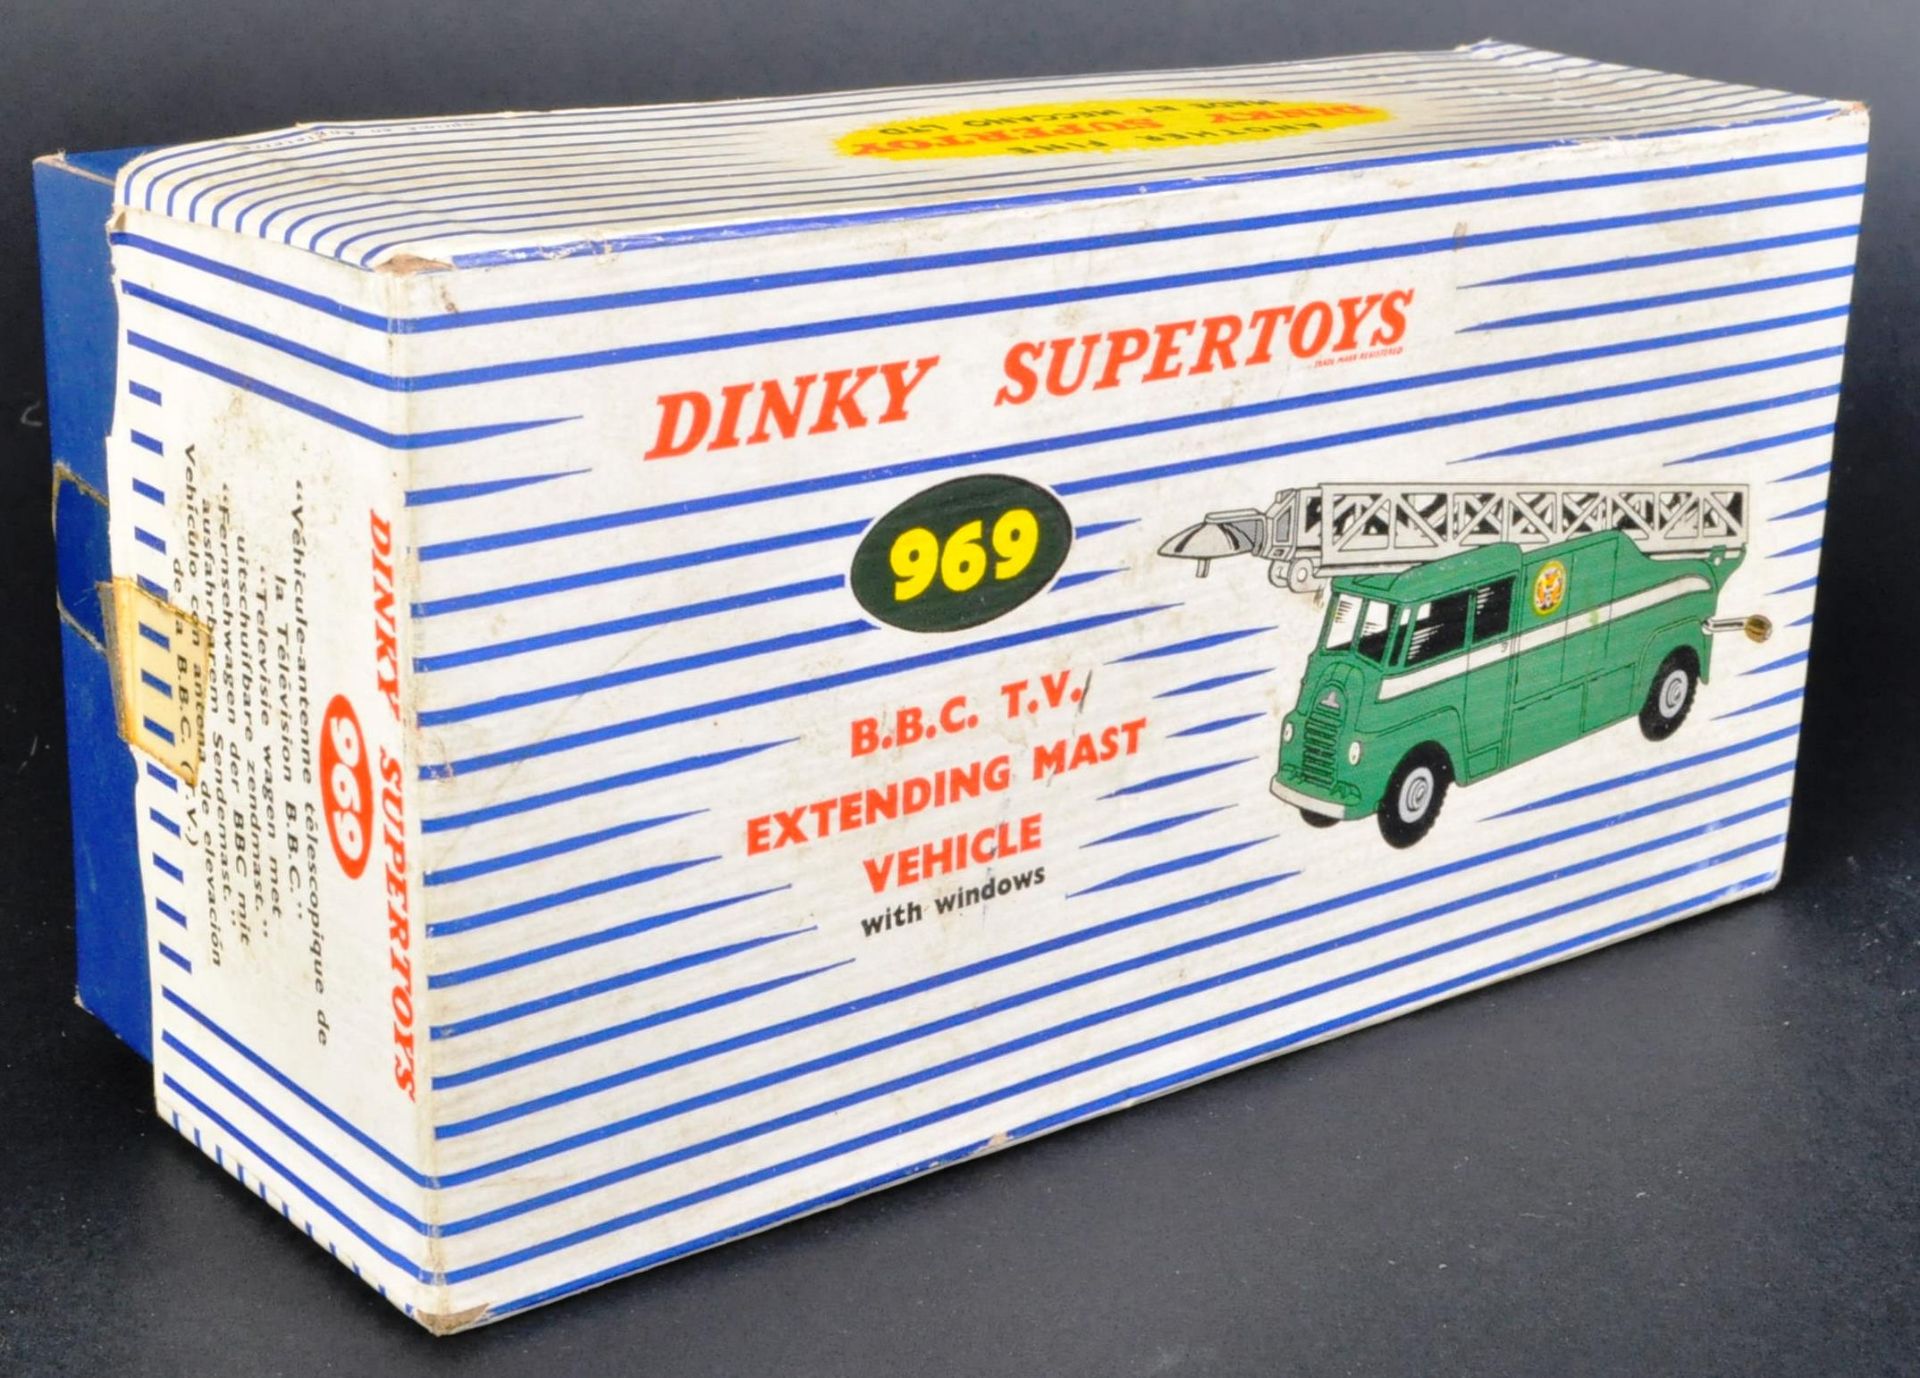 DINKY SUPERTOYS - ORIGINAL VINTAGE 969 BBC TV VEHICLE BOXED - Image 4 of 5